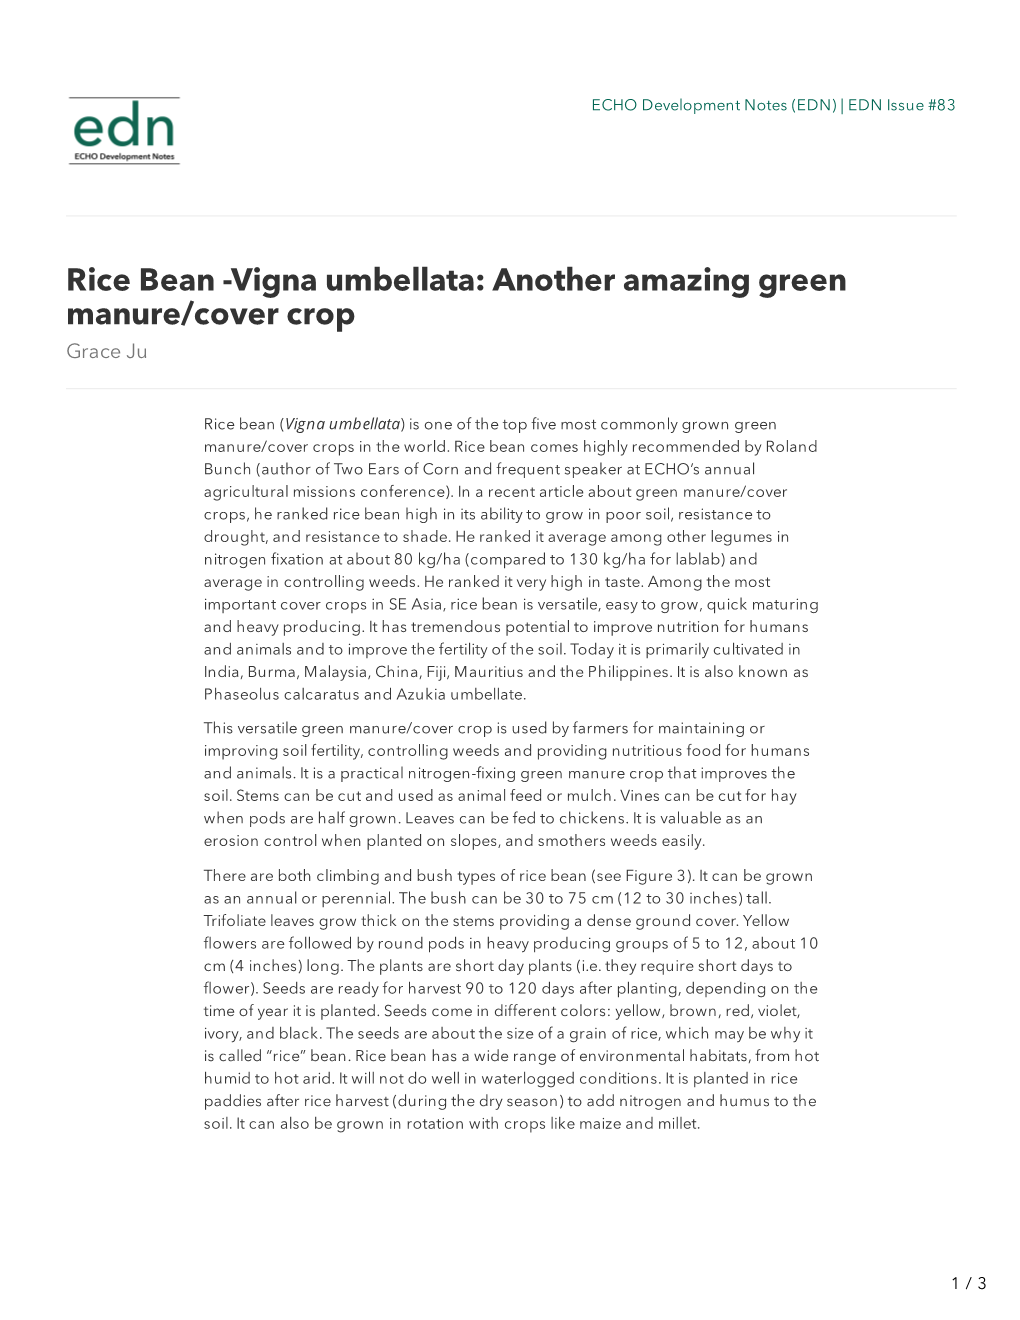 Rice Bean -Vigna Umbellata: Another Amazing Green Manure/Cover Crop Grace Ju